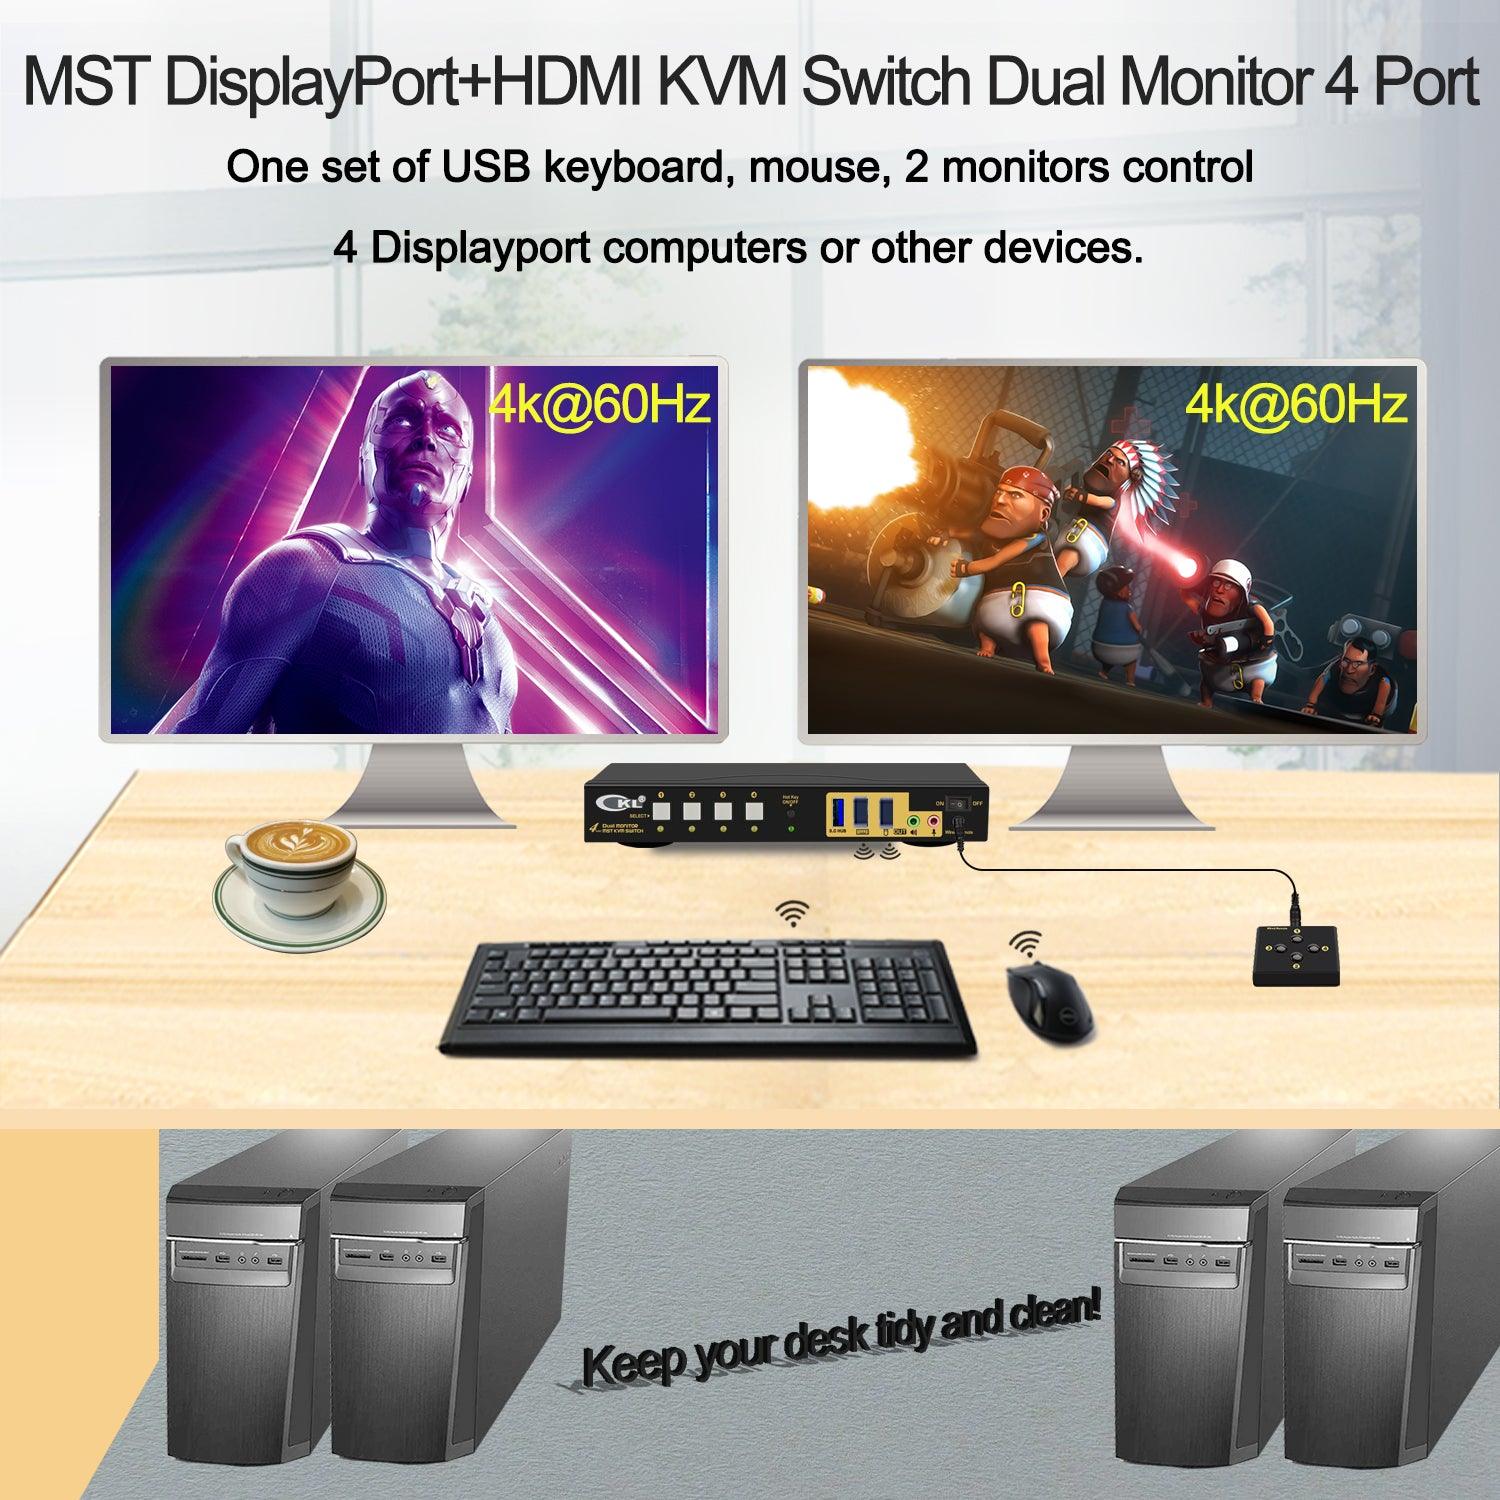 CKL DisplayPort 1.4 MST KVM Switch Dual Monitor 4 Port 4K 60Hz | DisplayPort + HDMI Output | 4 Computers 2 Monitors | Support USB 3.0, Audio, Mic (642DH-MST) - CKL KVM Switches